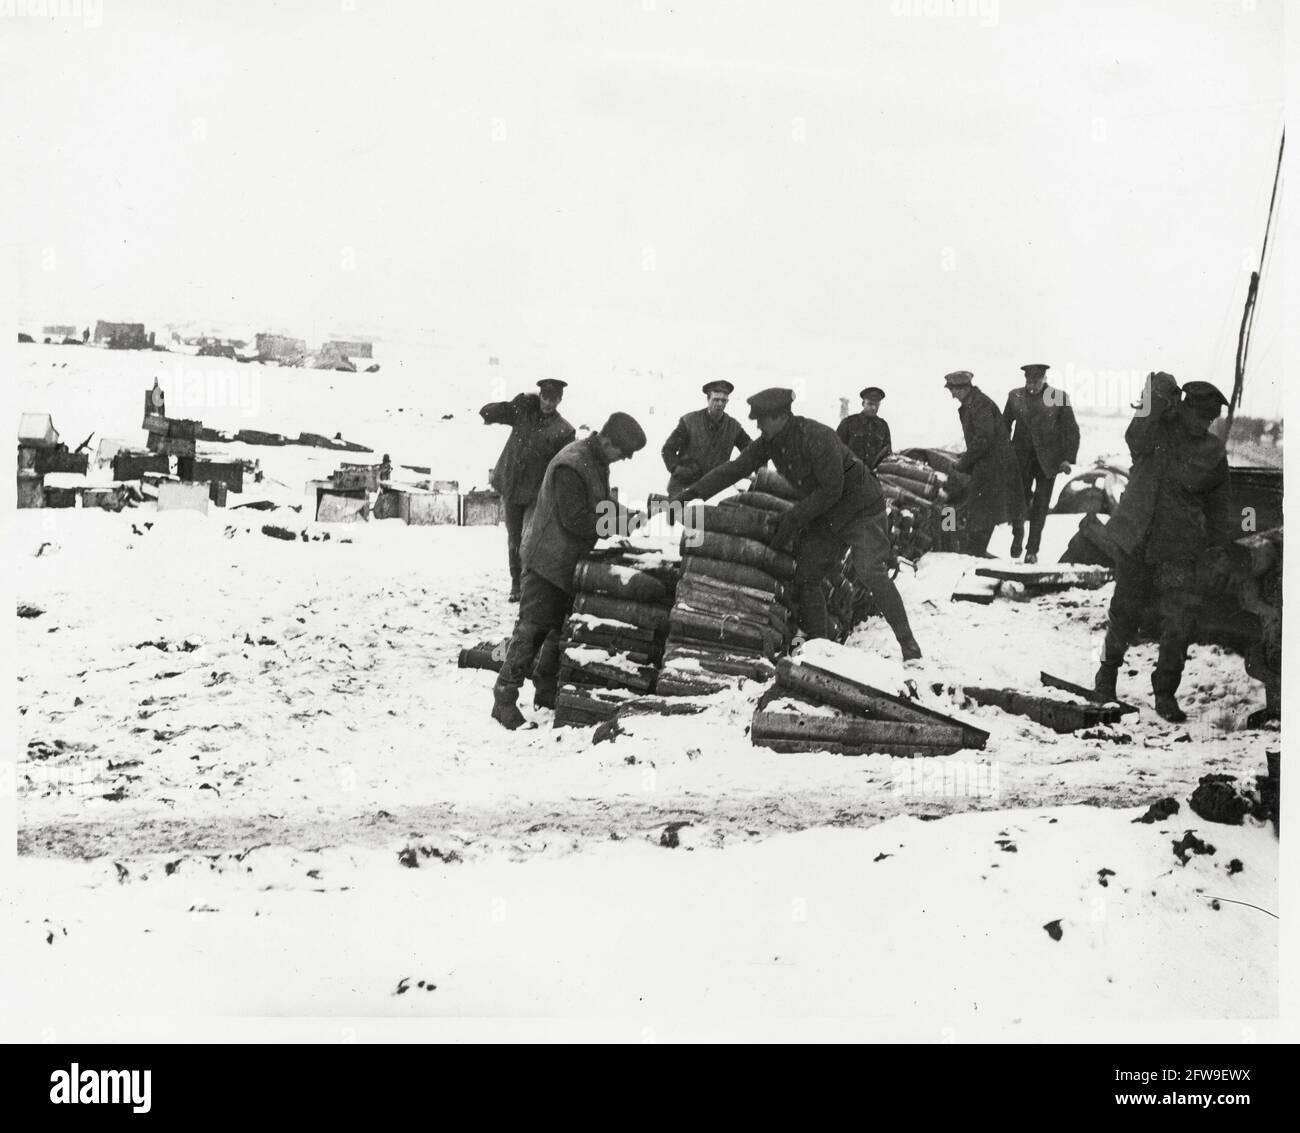 World War One, WWI, Western Front - Artillerymen handling shells in the snow, France Stock Photo